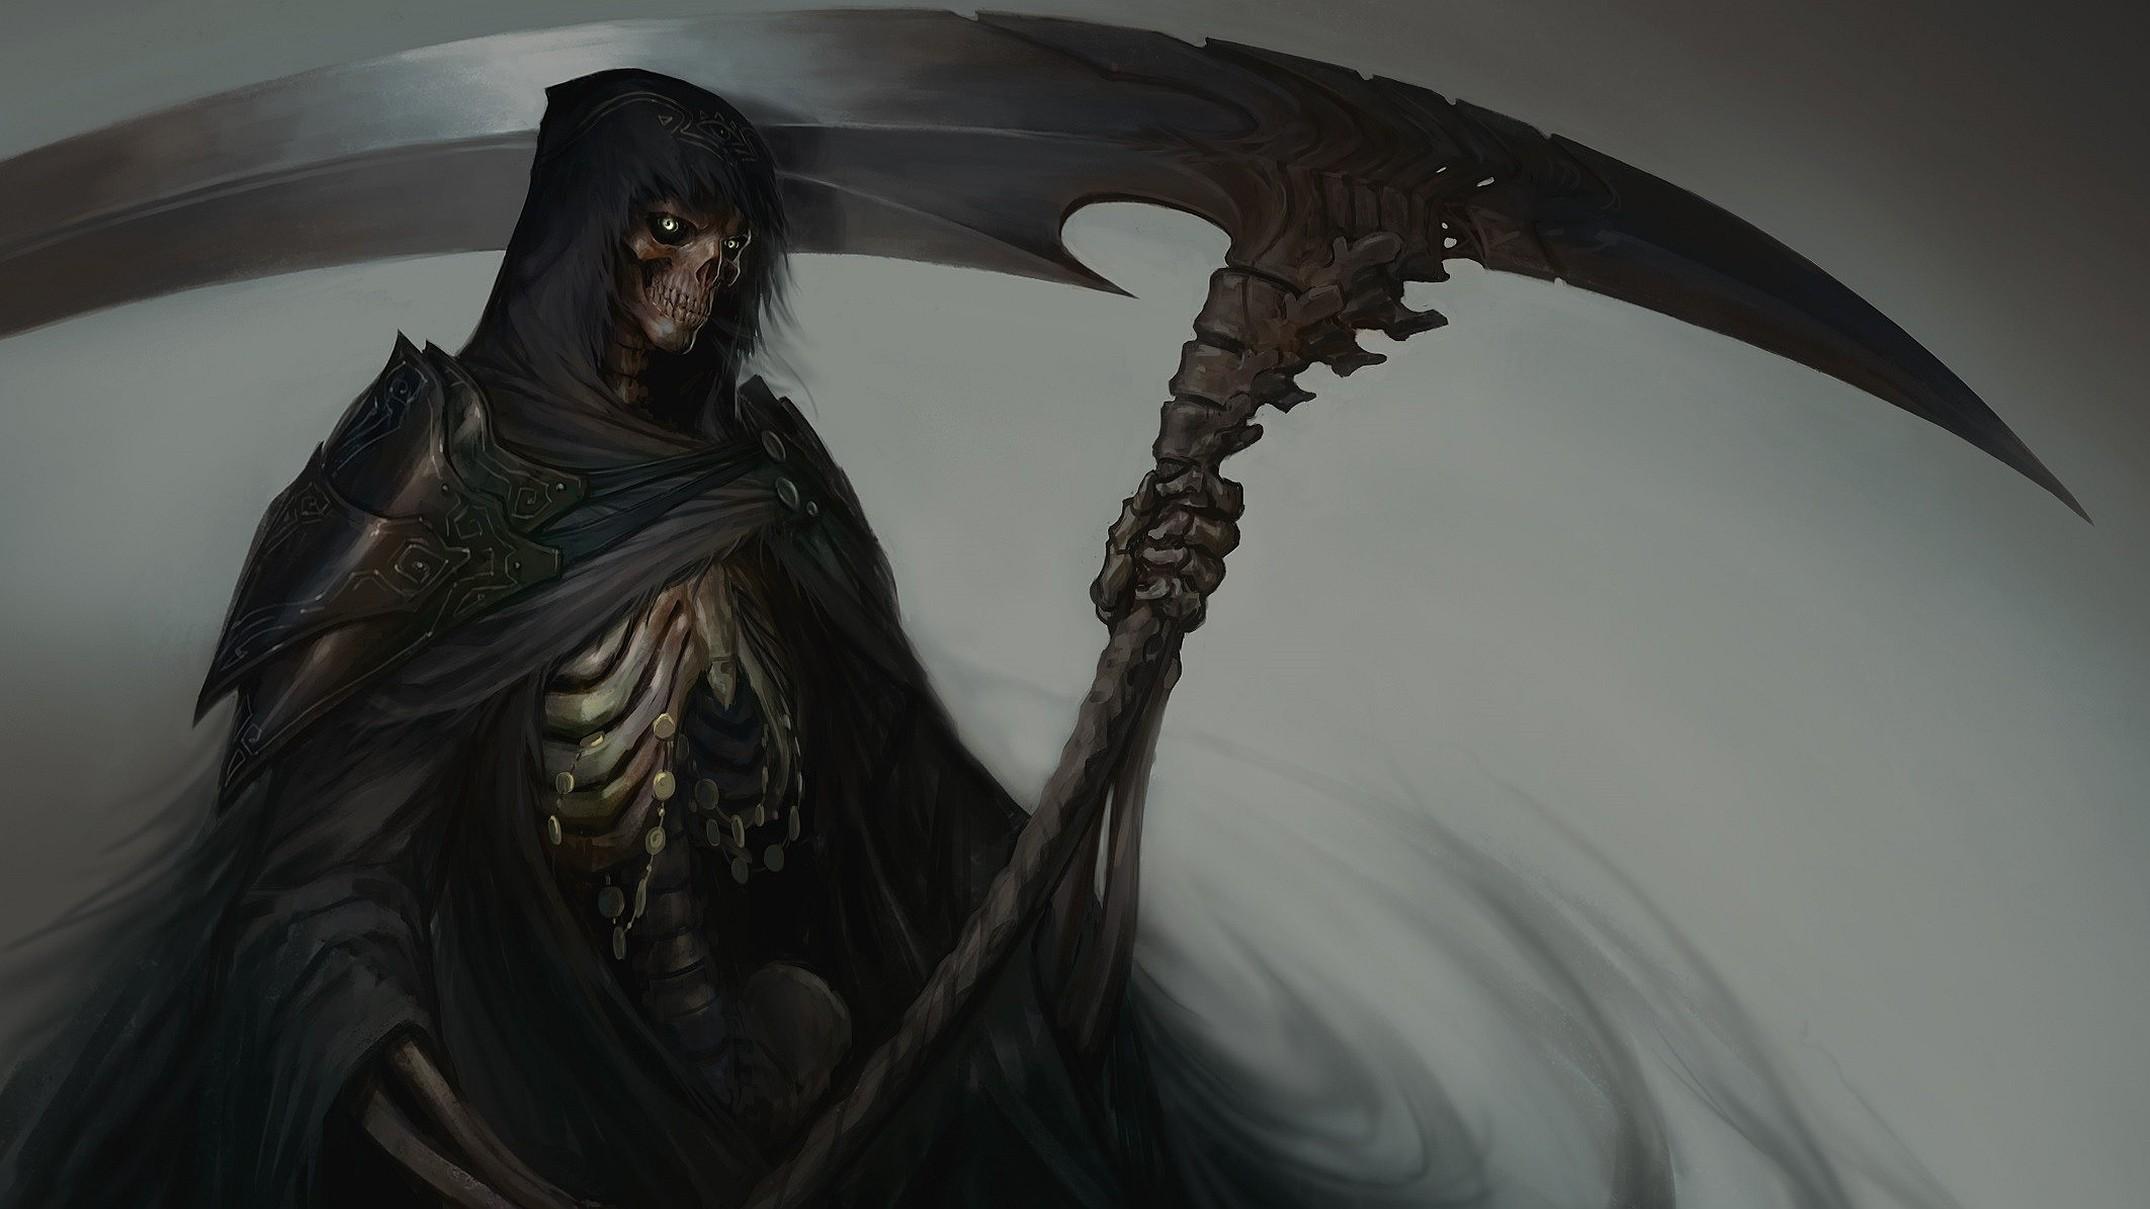 #scythe, #death, #fantasy art, #Grim Reaper, #dark